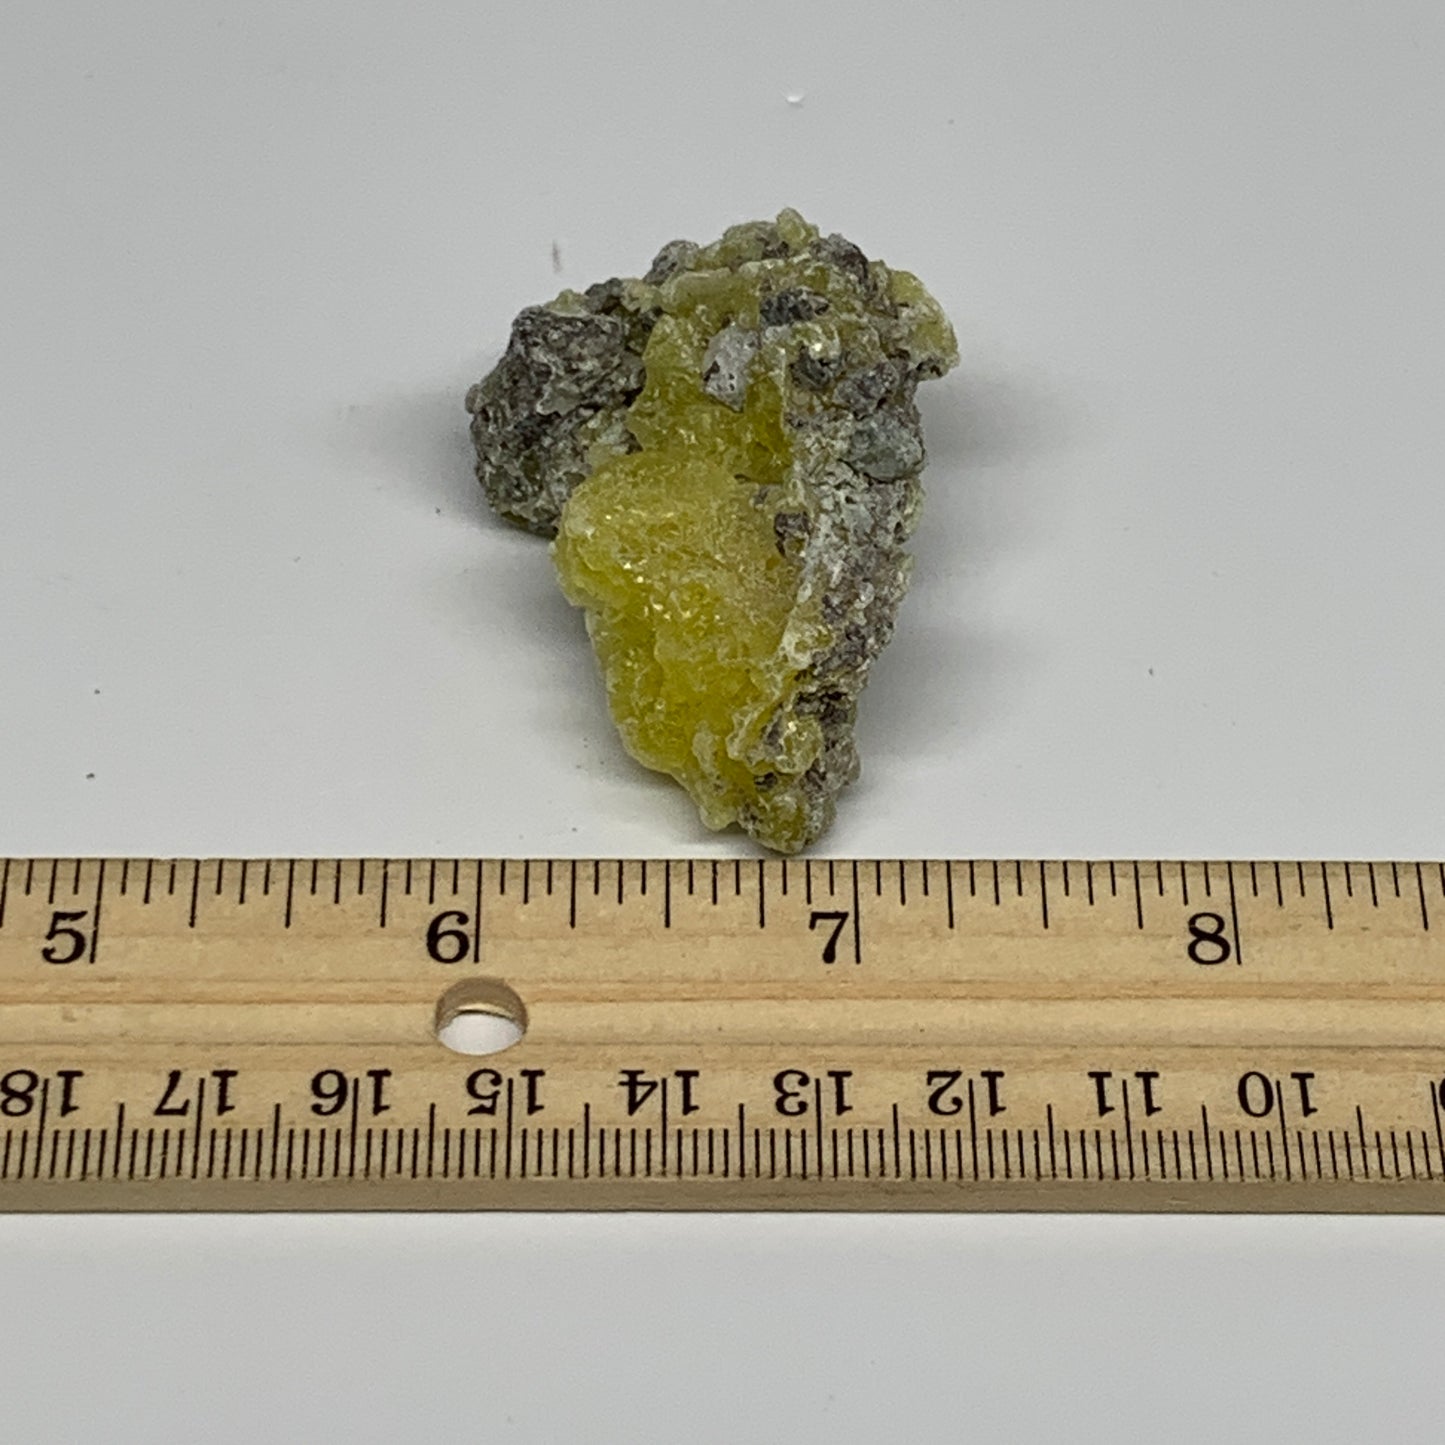 24.8g, 2"x1.4"x0.9", Rough Brucite Crystal Mineral Specimens @Pakistan, B27371